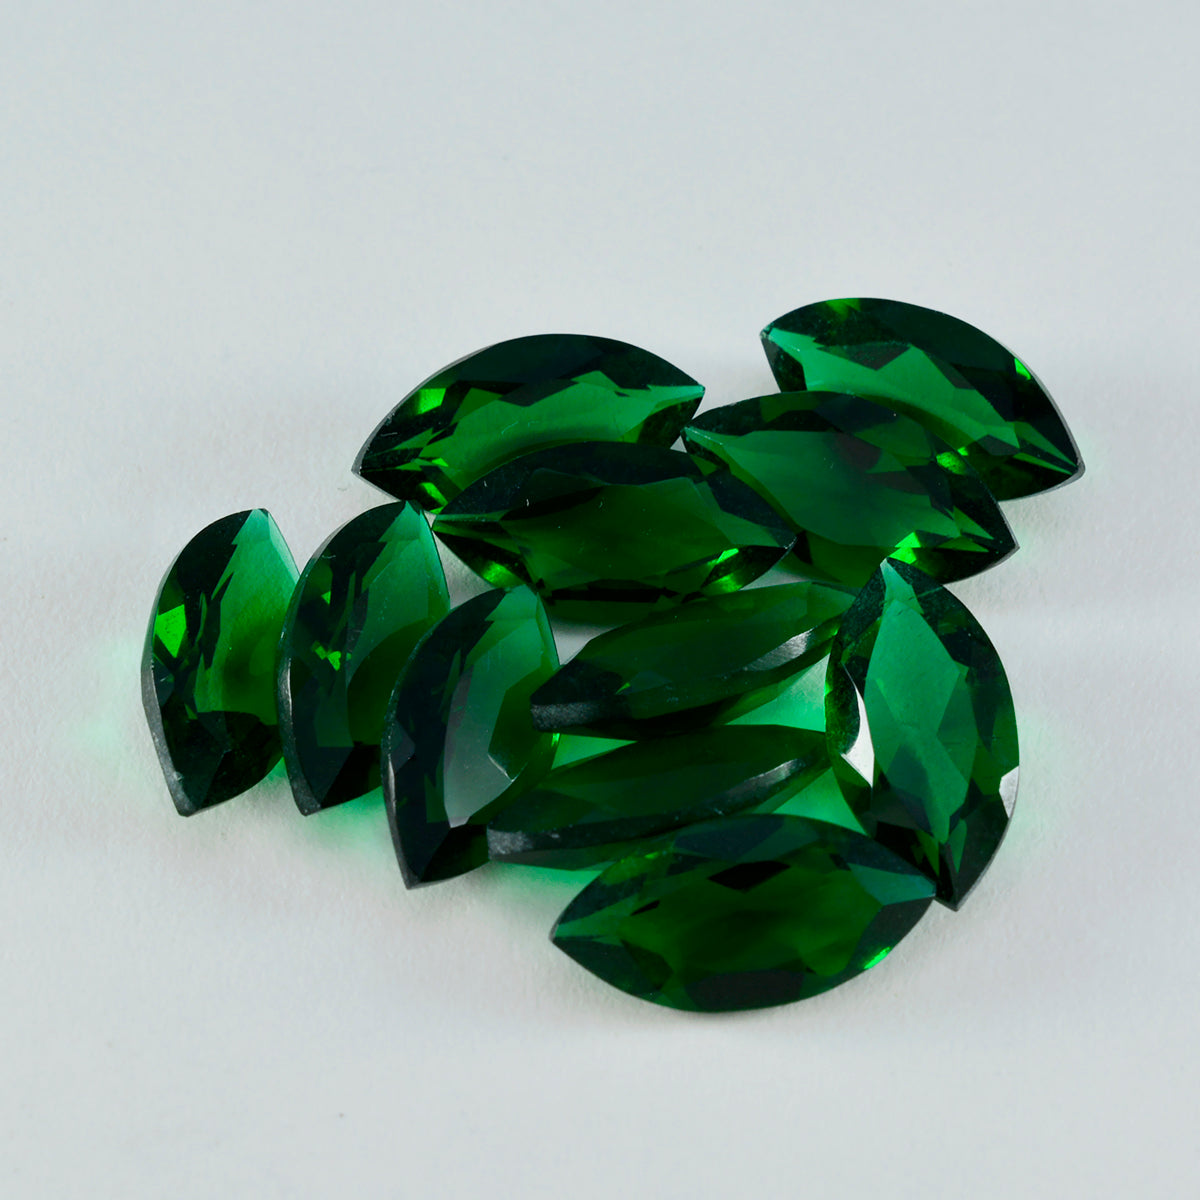 Riyogems 1PC Green Emerald CZ Faceted 8x16 mm Marquise Shape A+1 Quality Gems